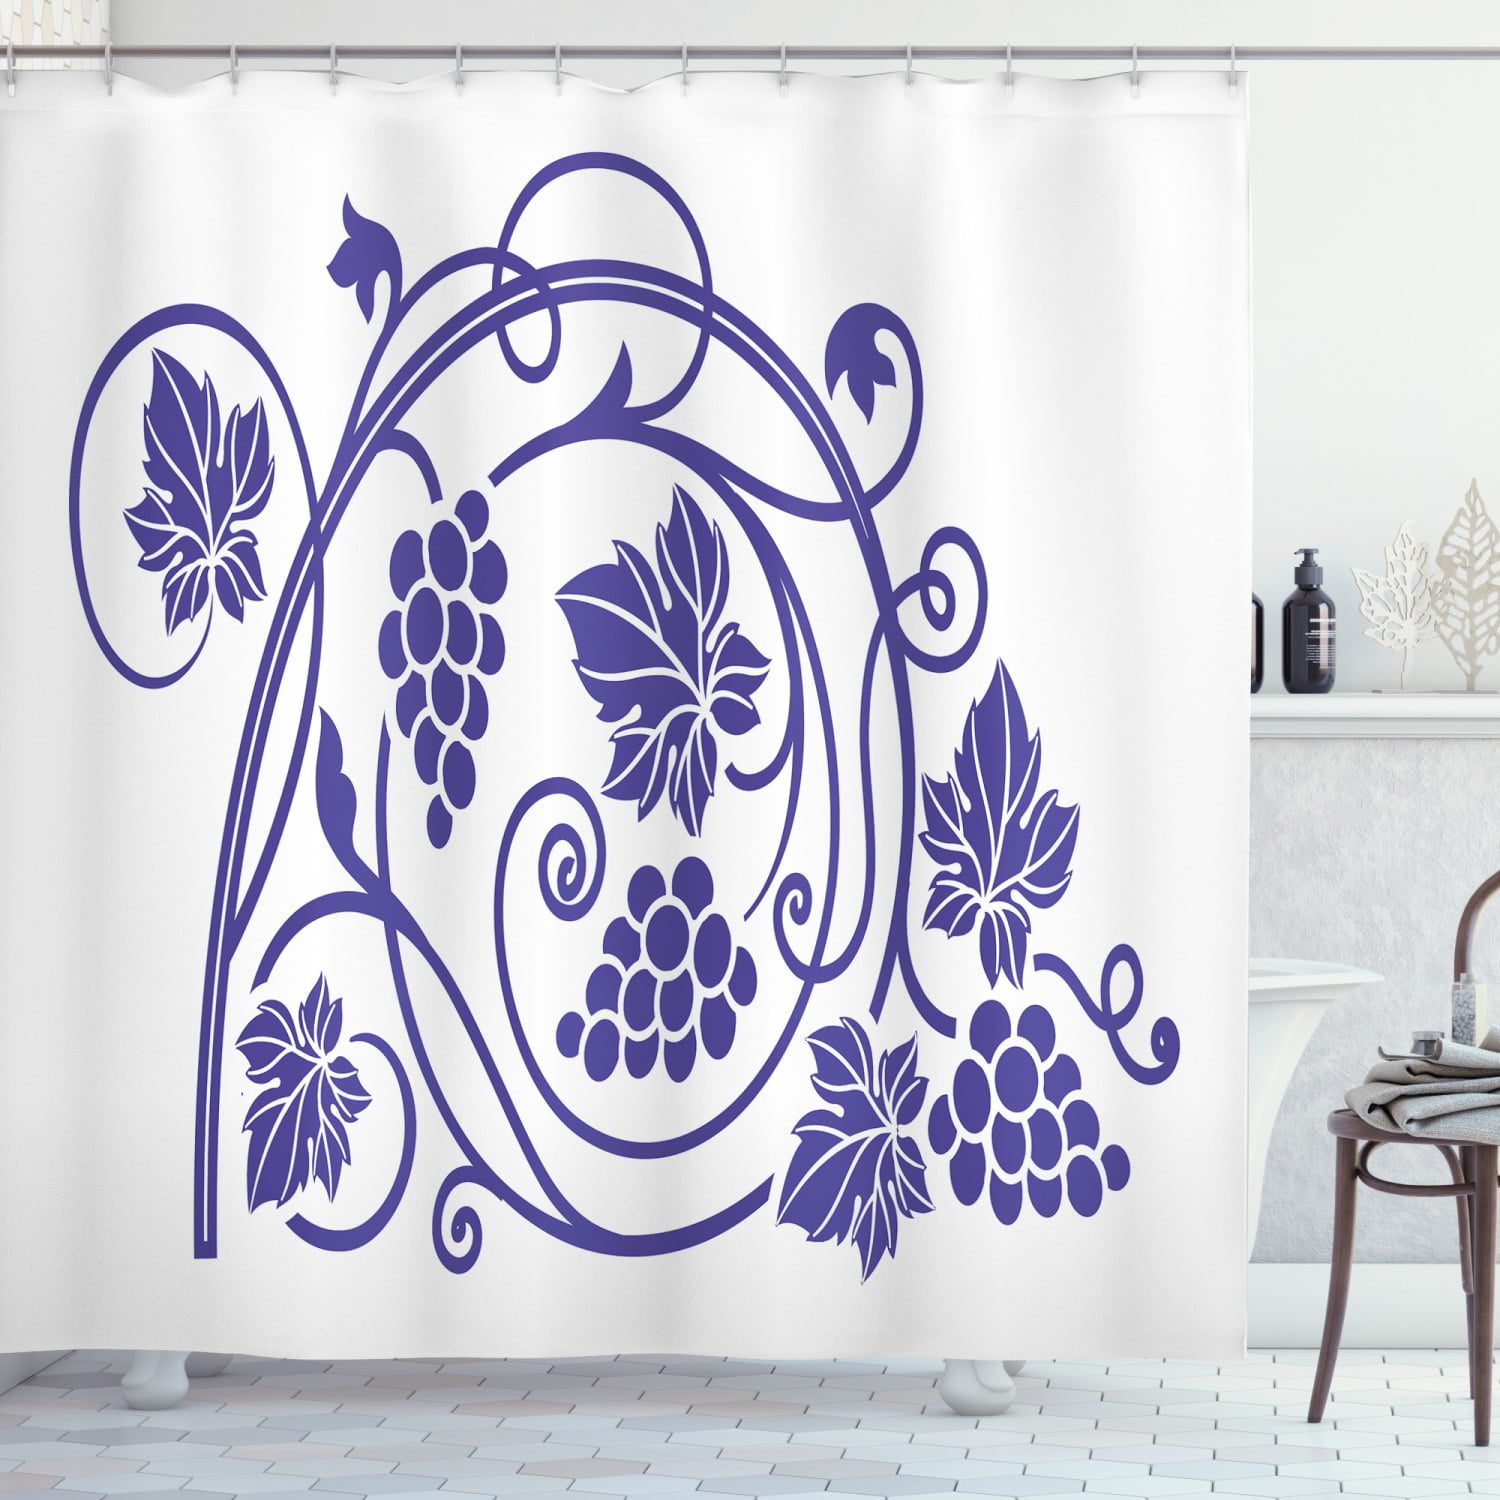 Fruit Grape Pattern Shower Curtain Bathroom Decor Fabric & 12hooks 71x71inch 